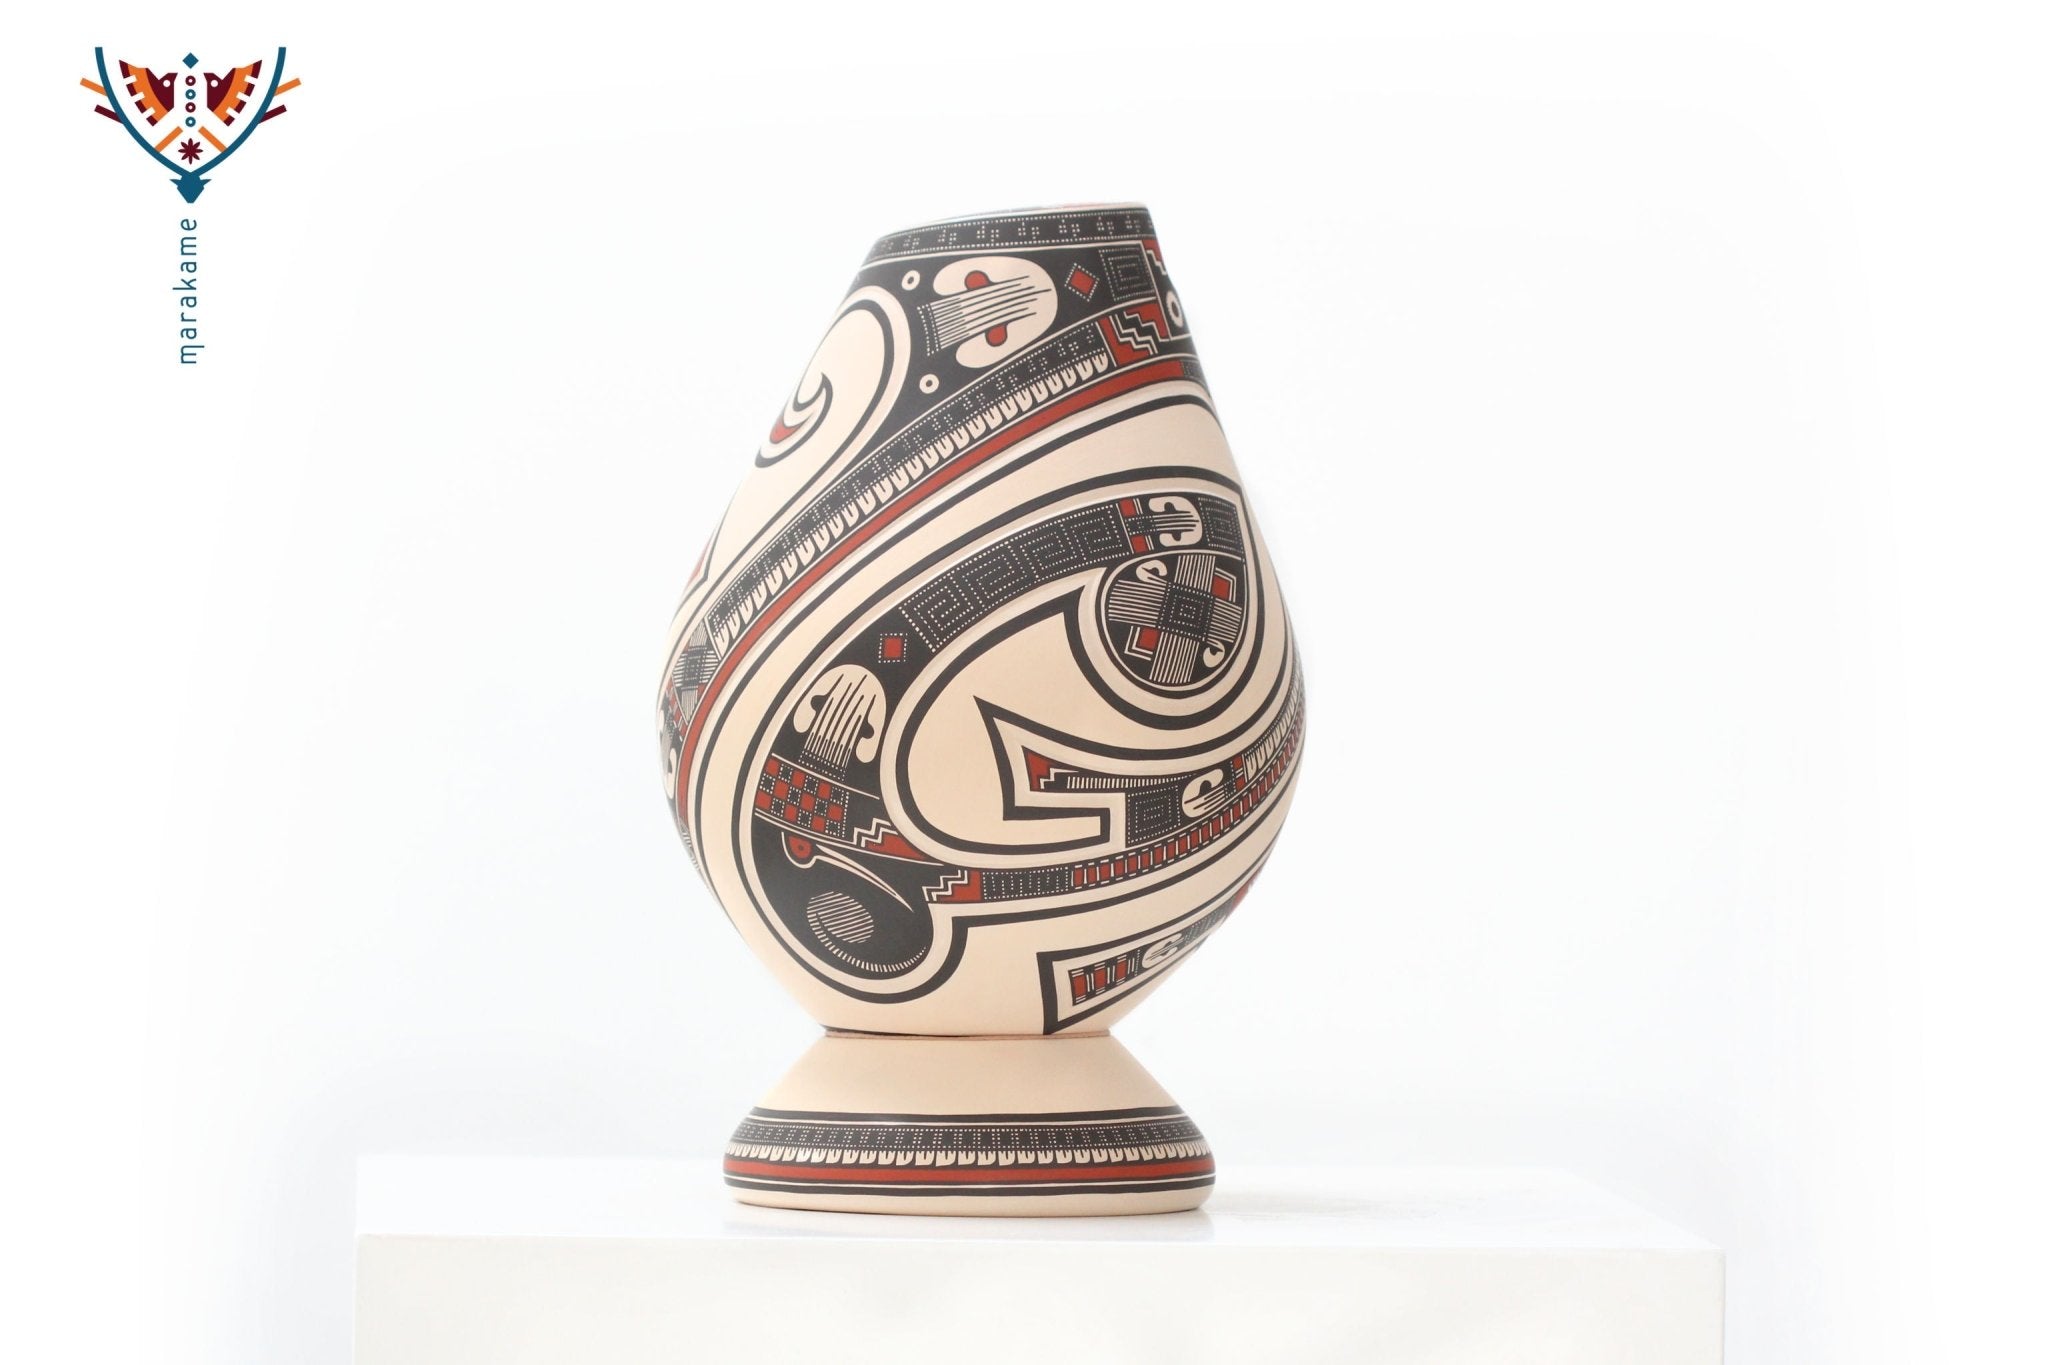 Mata Ortiz Keramik - Großes traditionelles Stück - Huichol-Kunst - Marakame